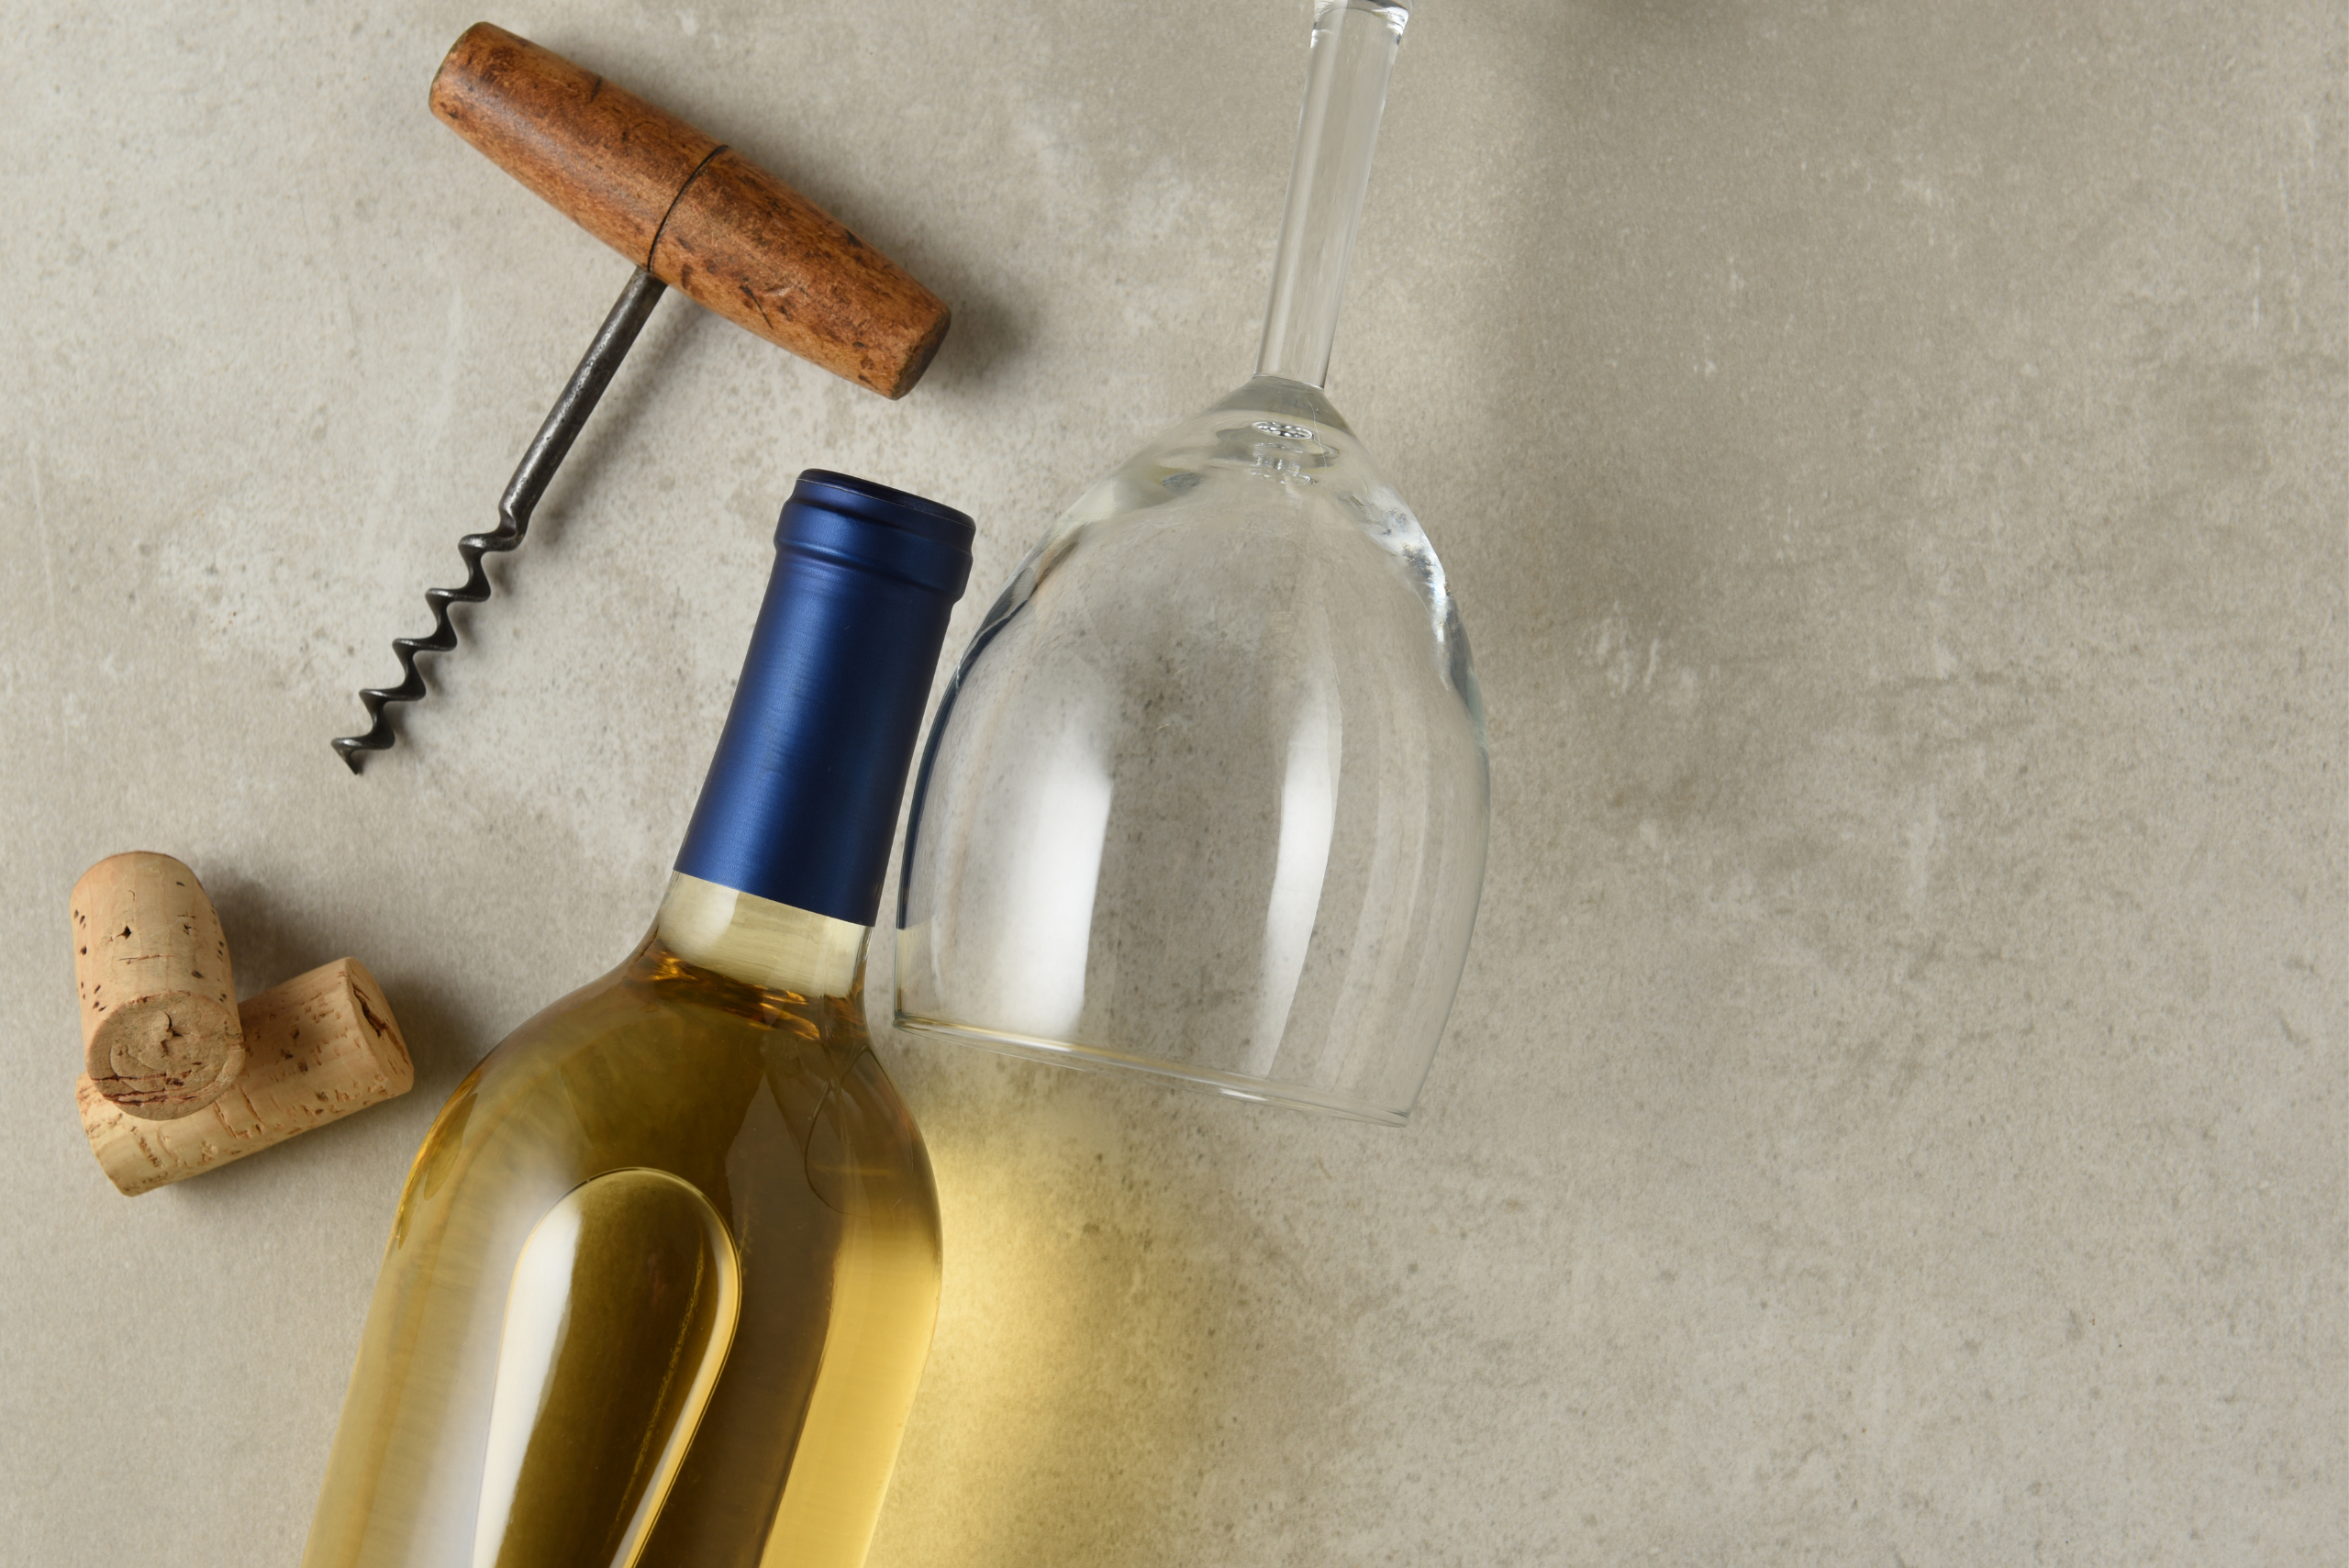 Wine bottle laid near corkscrew and wine glass.